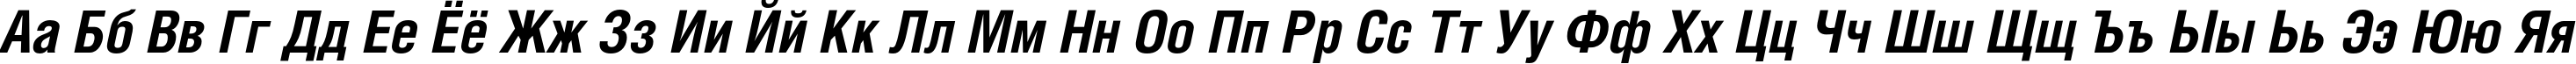 Пример написания русского алфавита шрифтом HeliosCond Bold Italic